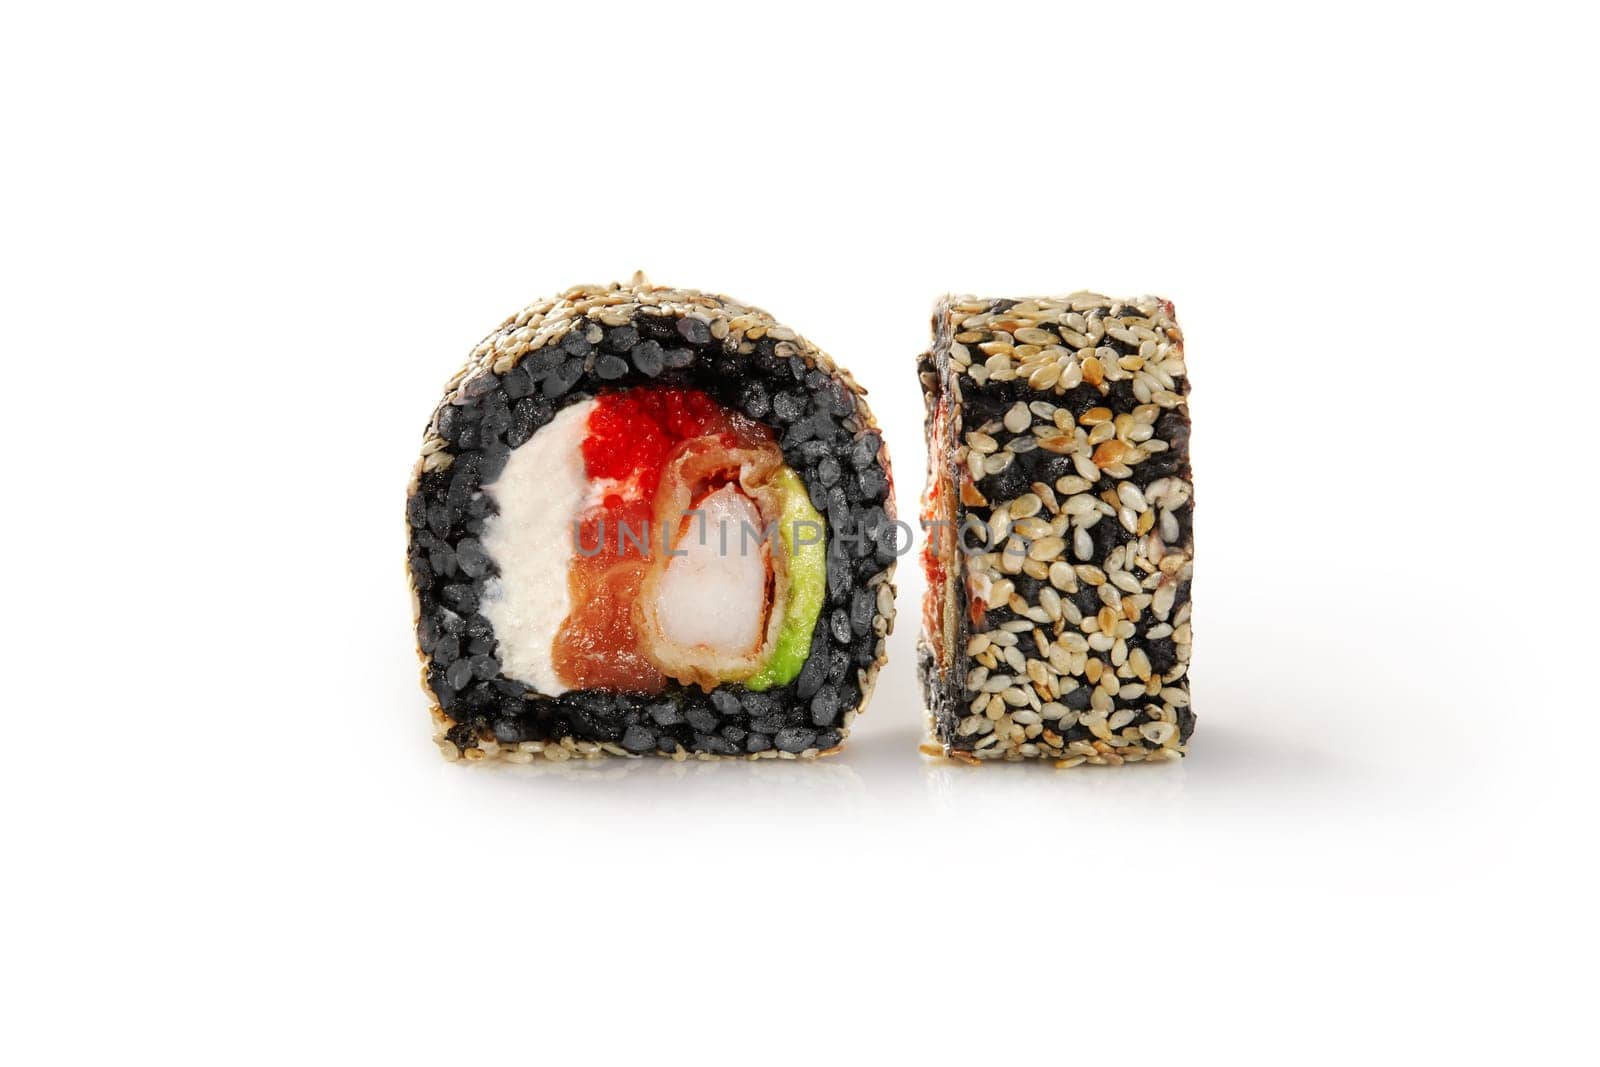 Black rice sushi roll with shrimp tempura on white background by nazarovsergey